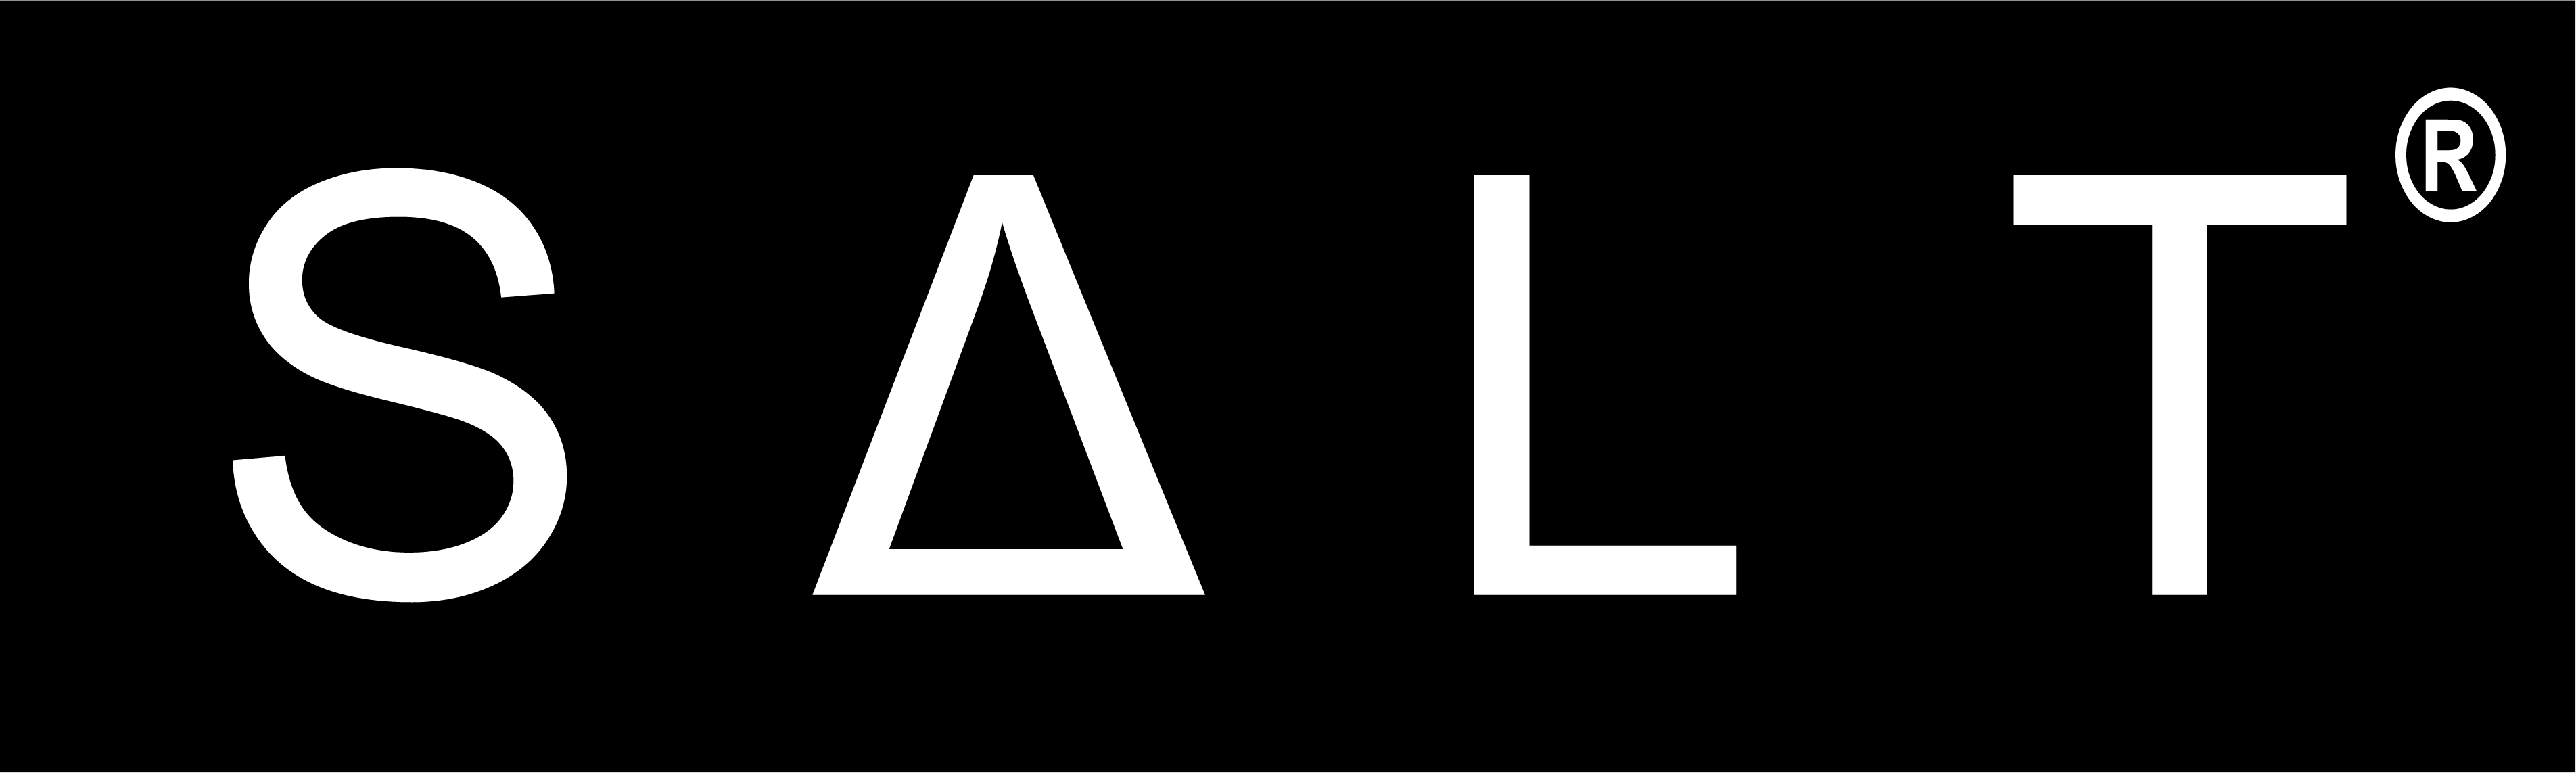 Salt logo uk